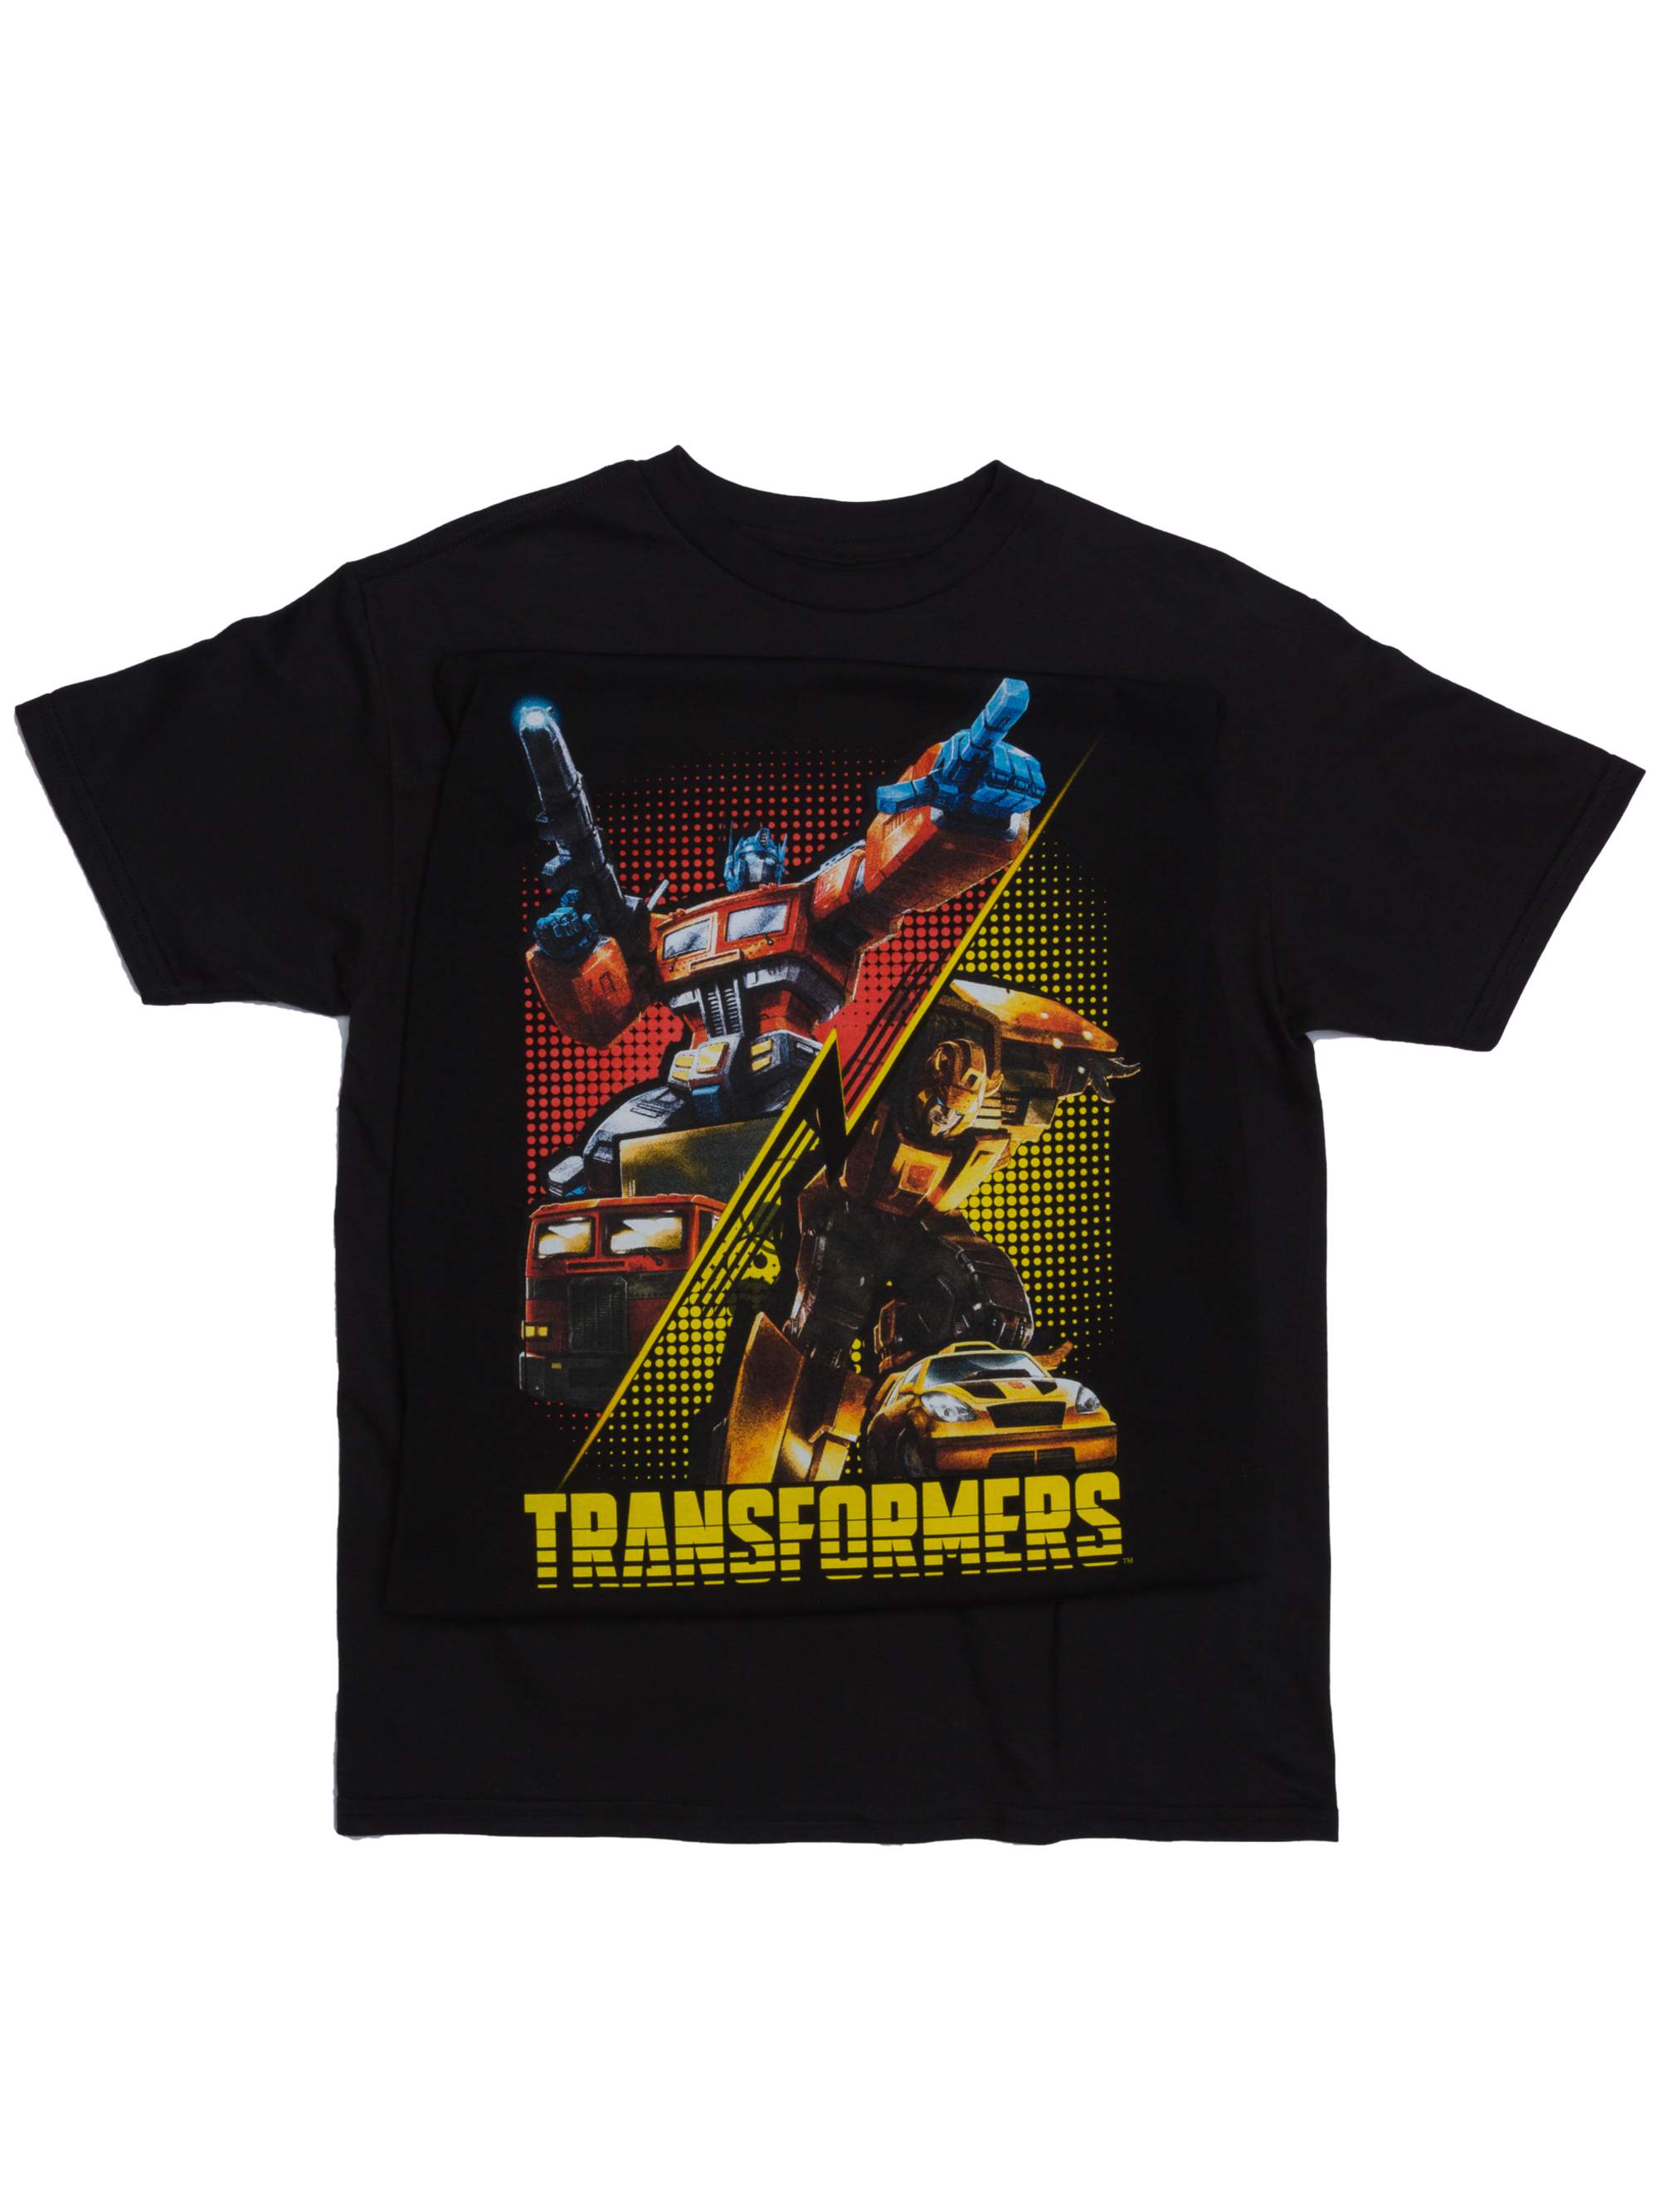 Transformers Short Sleeve Crew Neck Tee Shirt (Little Boys & Big Boys) - image 1 of 1